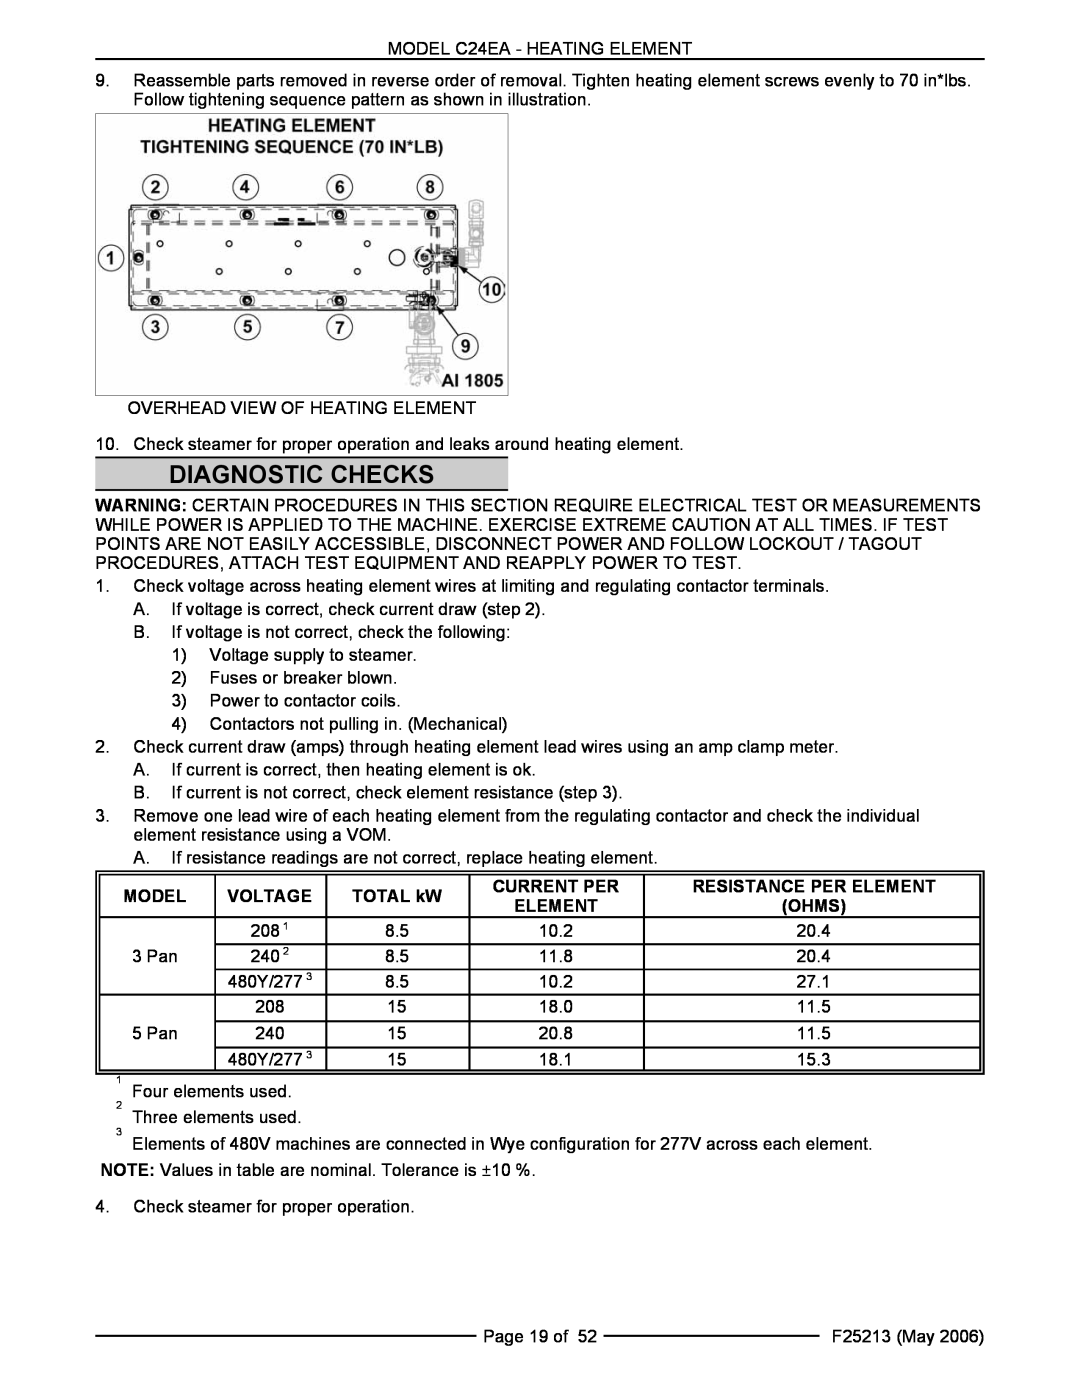 Vulcan-Hart C24EA3 208/240V BASIC Diagnostic Checks, Model, Voltage, TOTAL kW, Current Per, Resistance Per Element, Ohms 